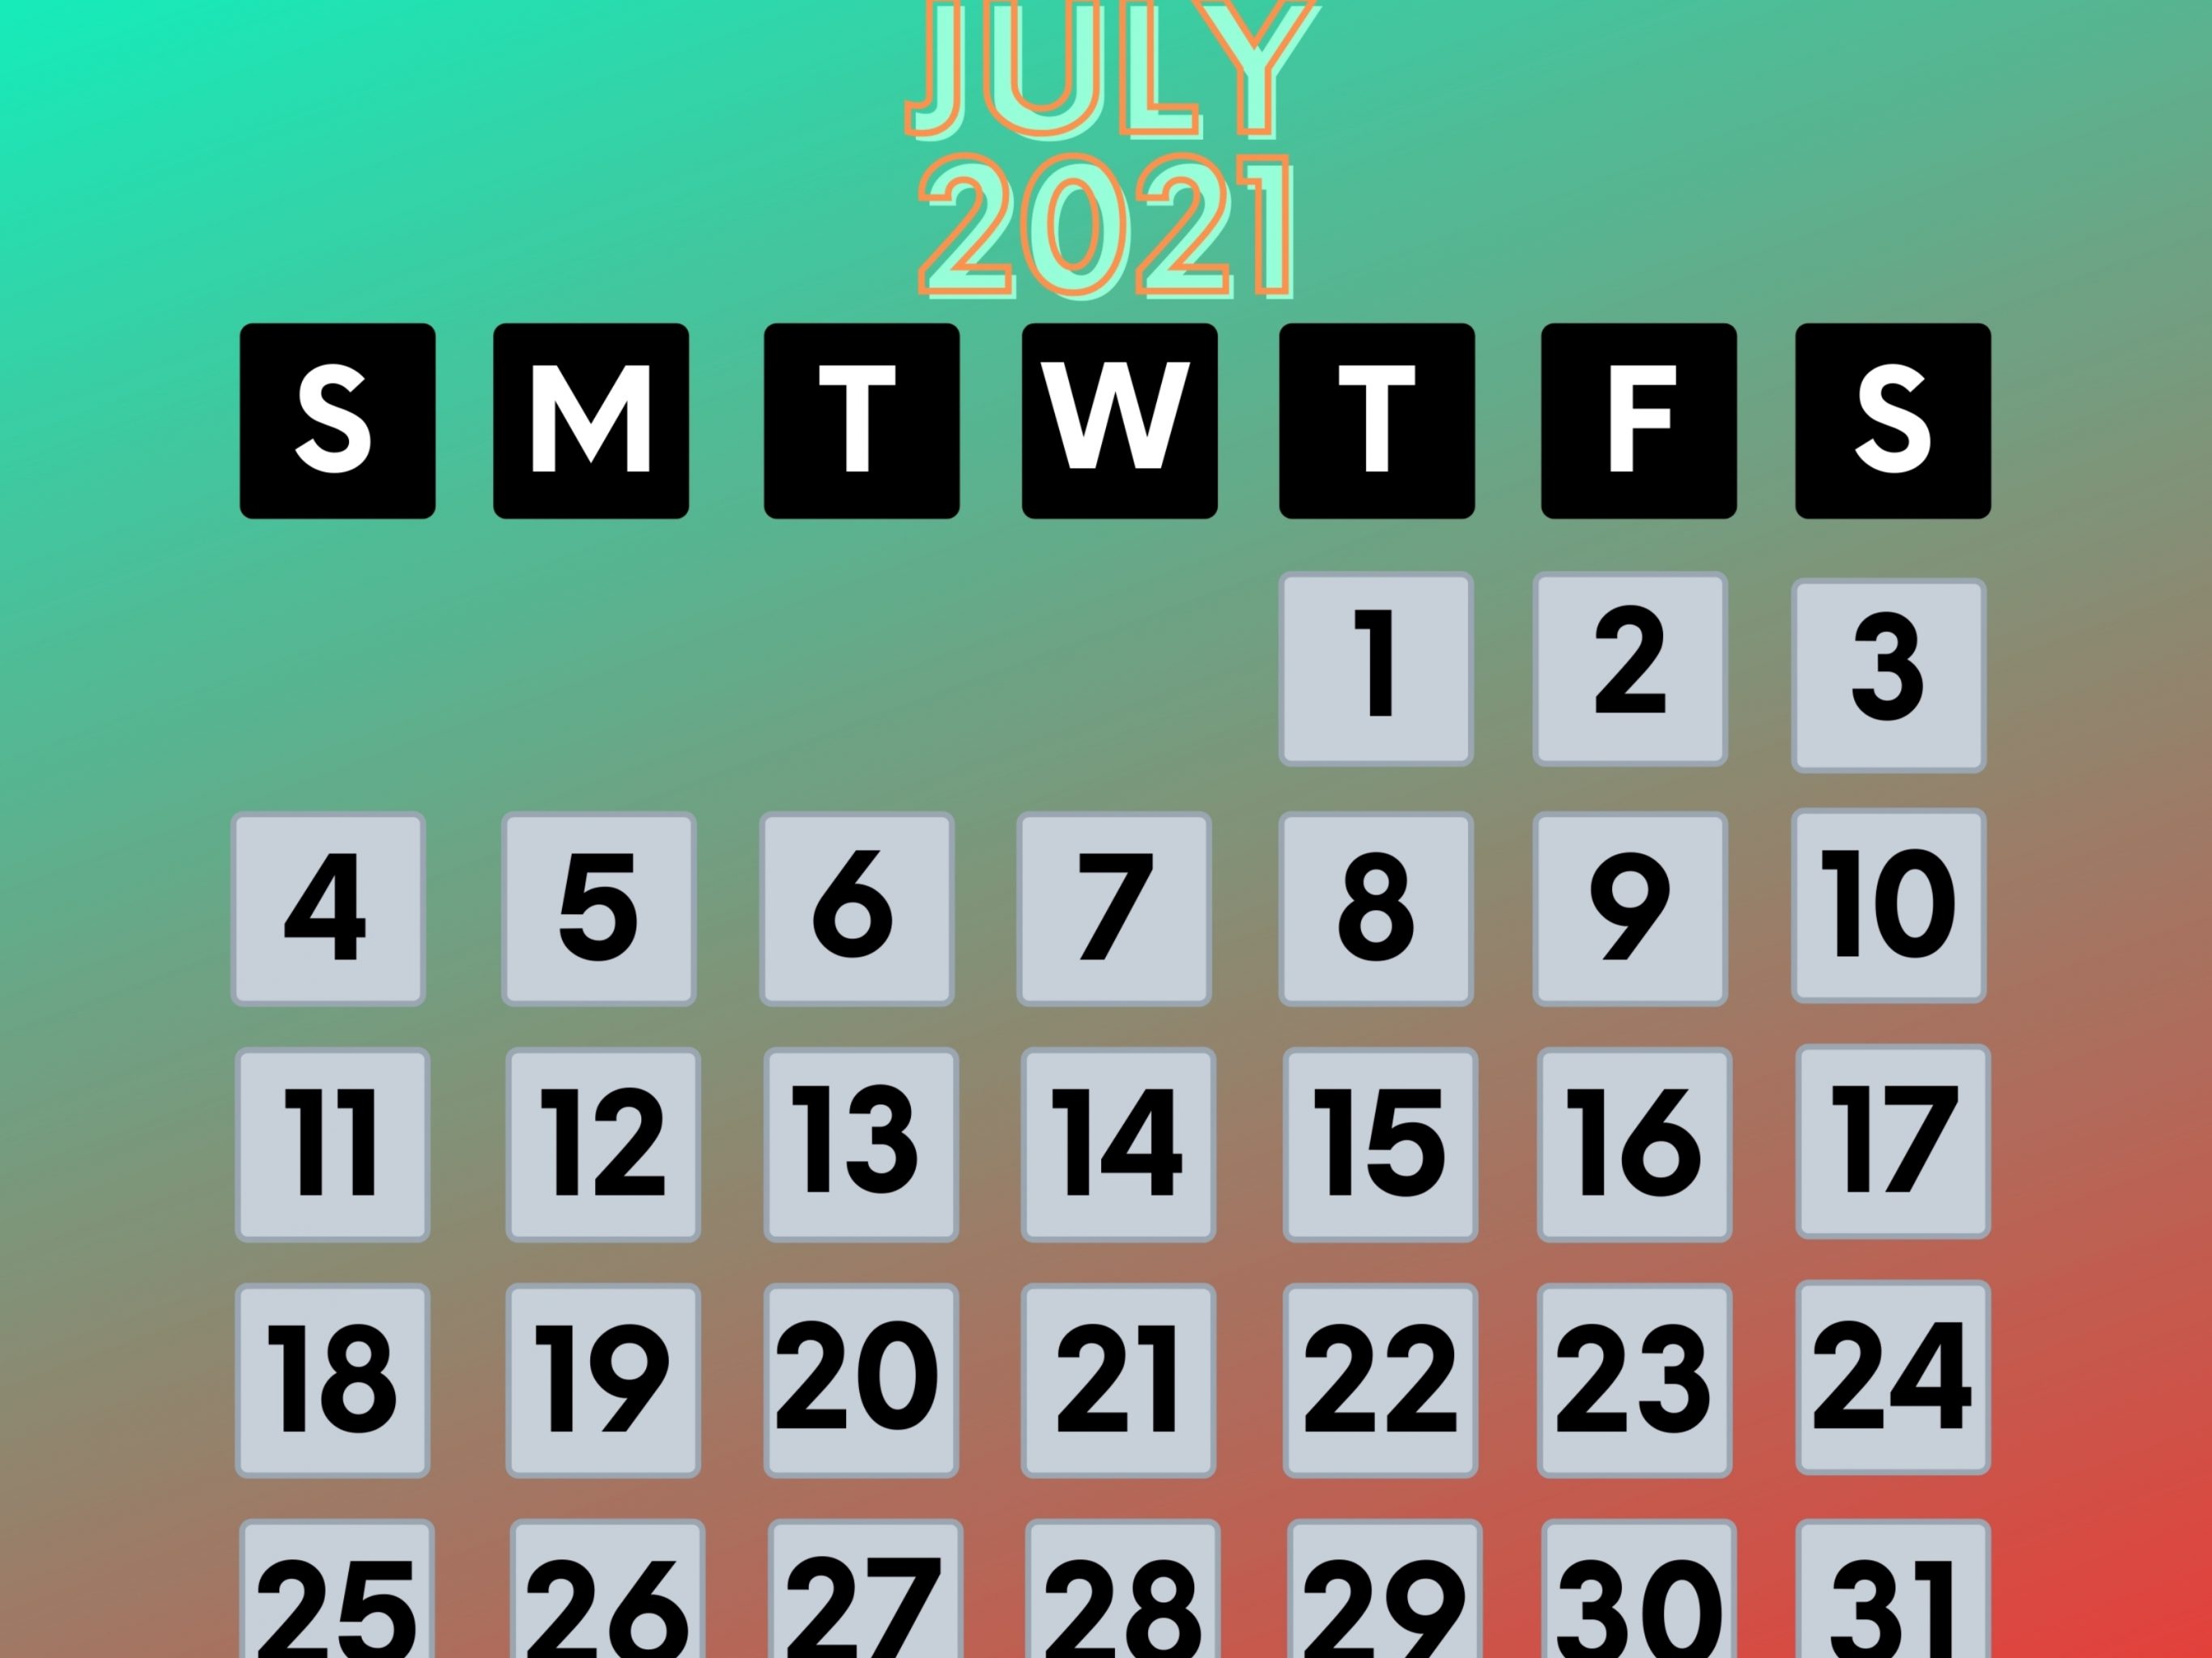 2732x2048 iPad air iPad Pro wallpapers July 2021 Calendar iPad Wallpaper 2732x2048 pixels resolution